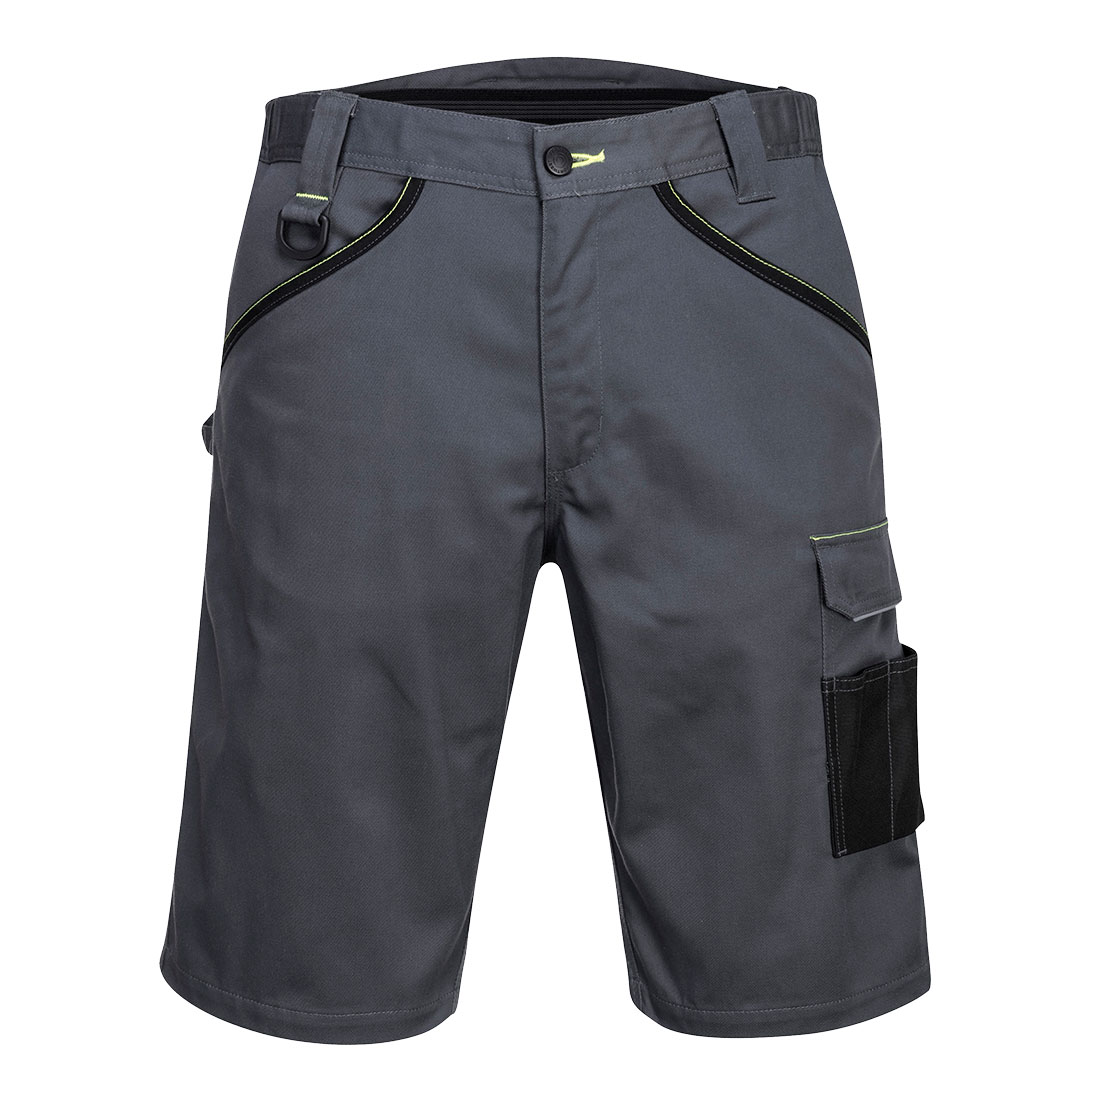 PW3 Work Shorts Velikost: 41, Barva: Zoom Grey/Black